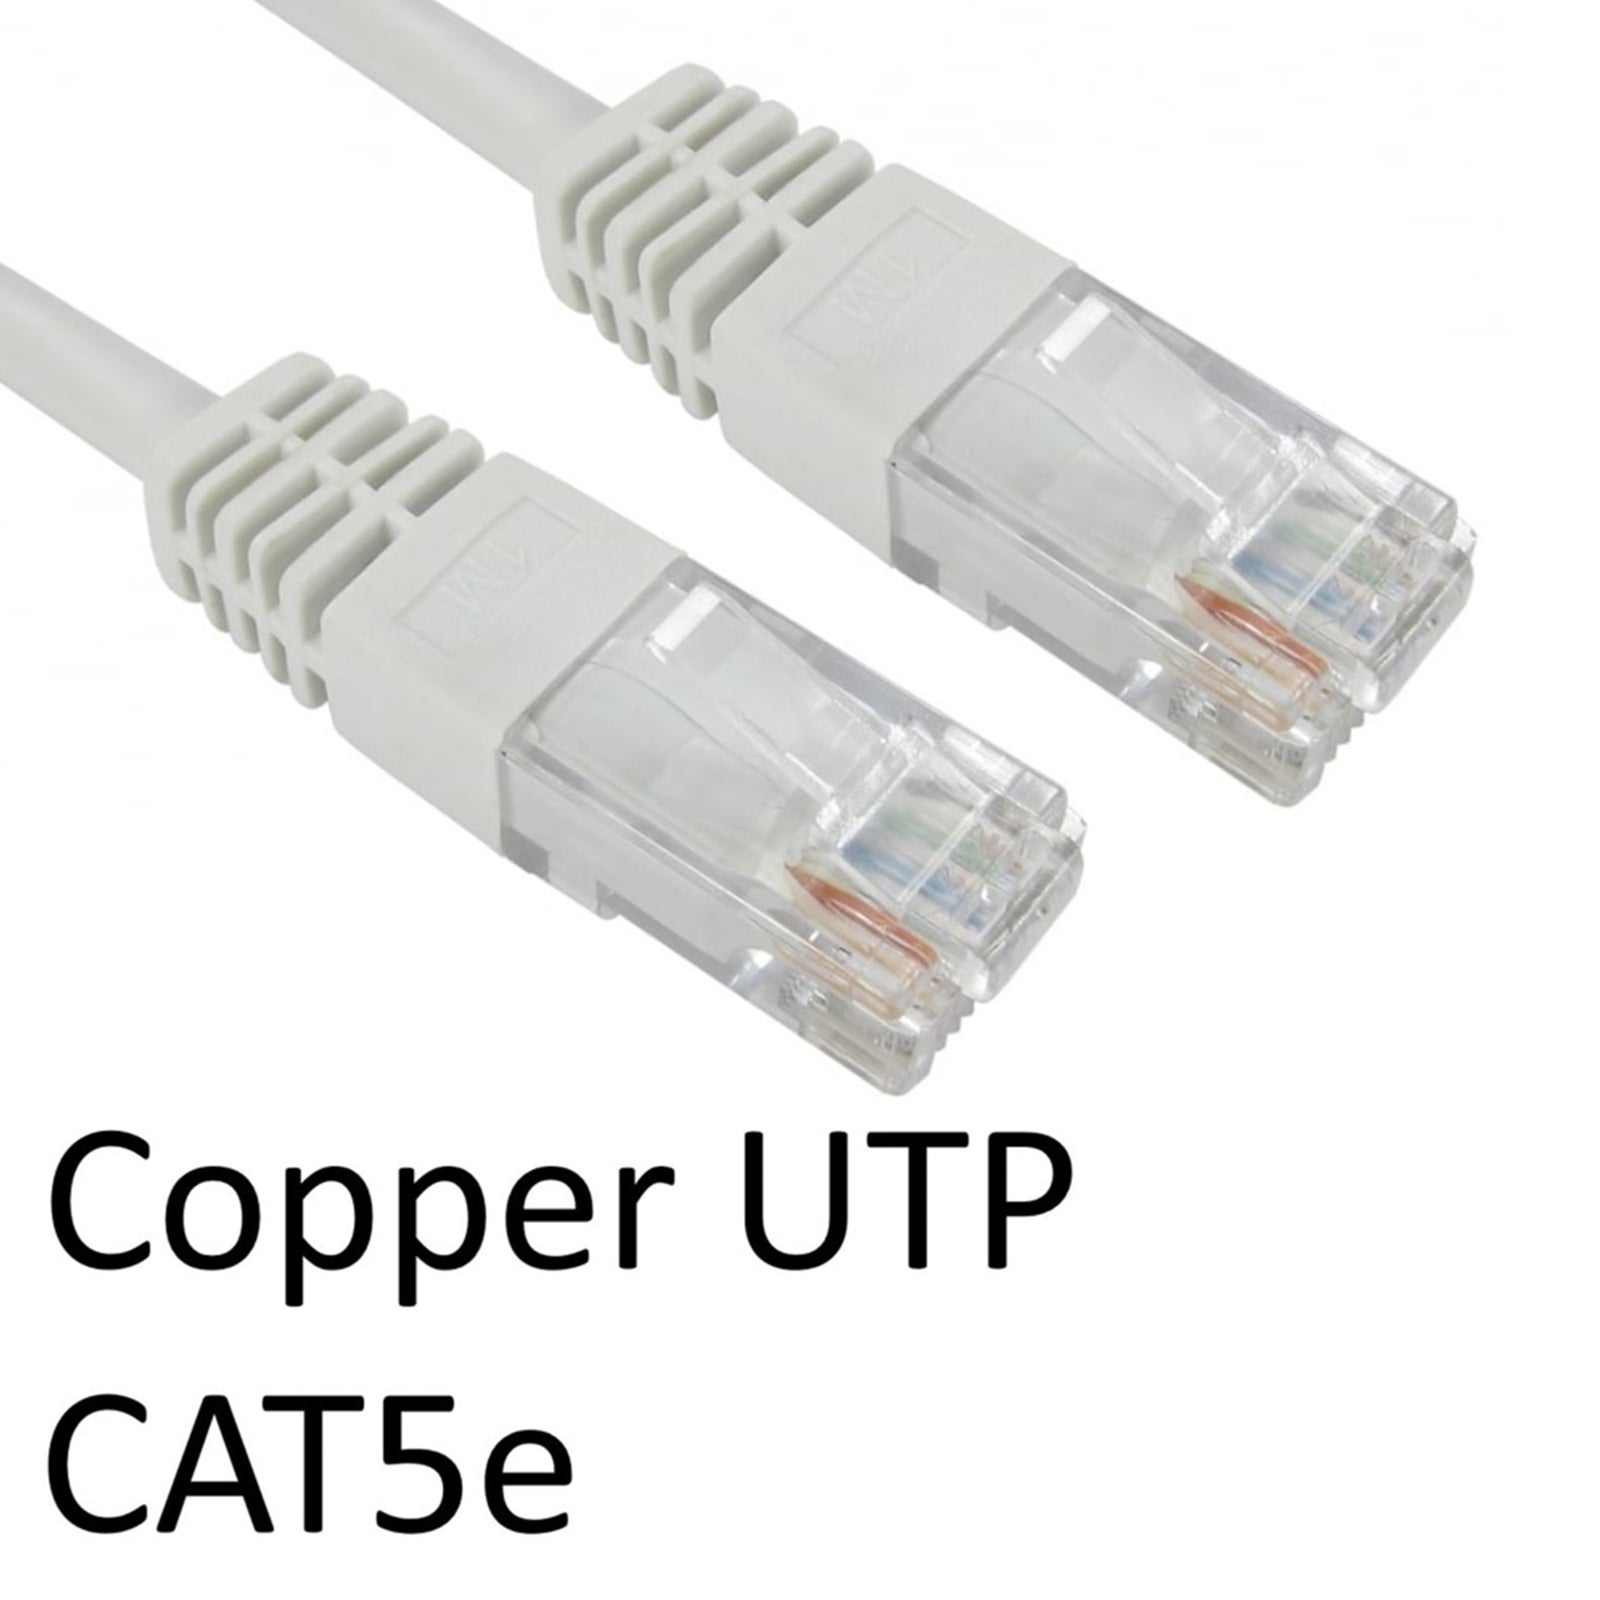 CAT5e Cables